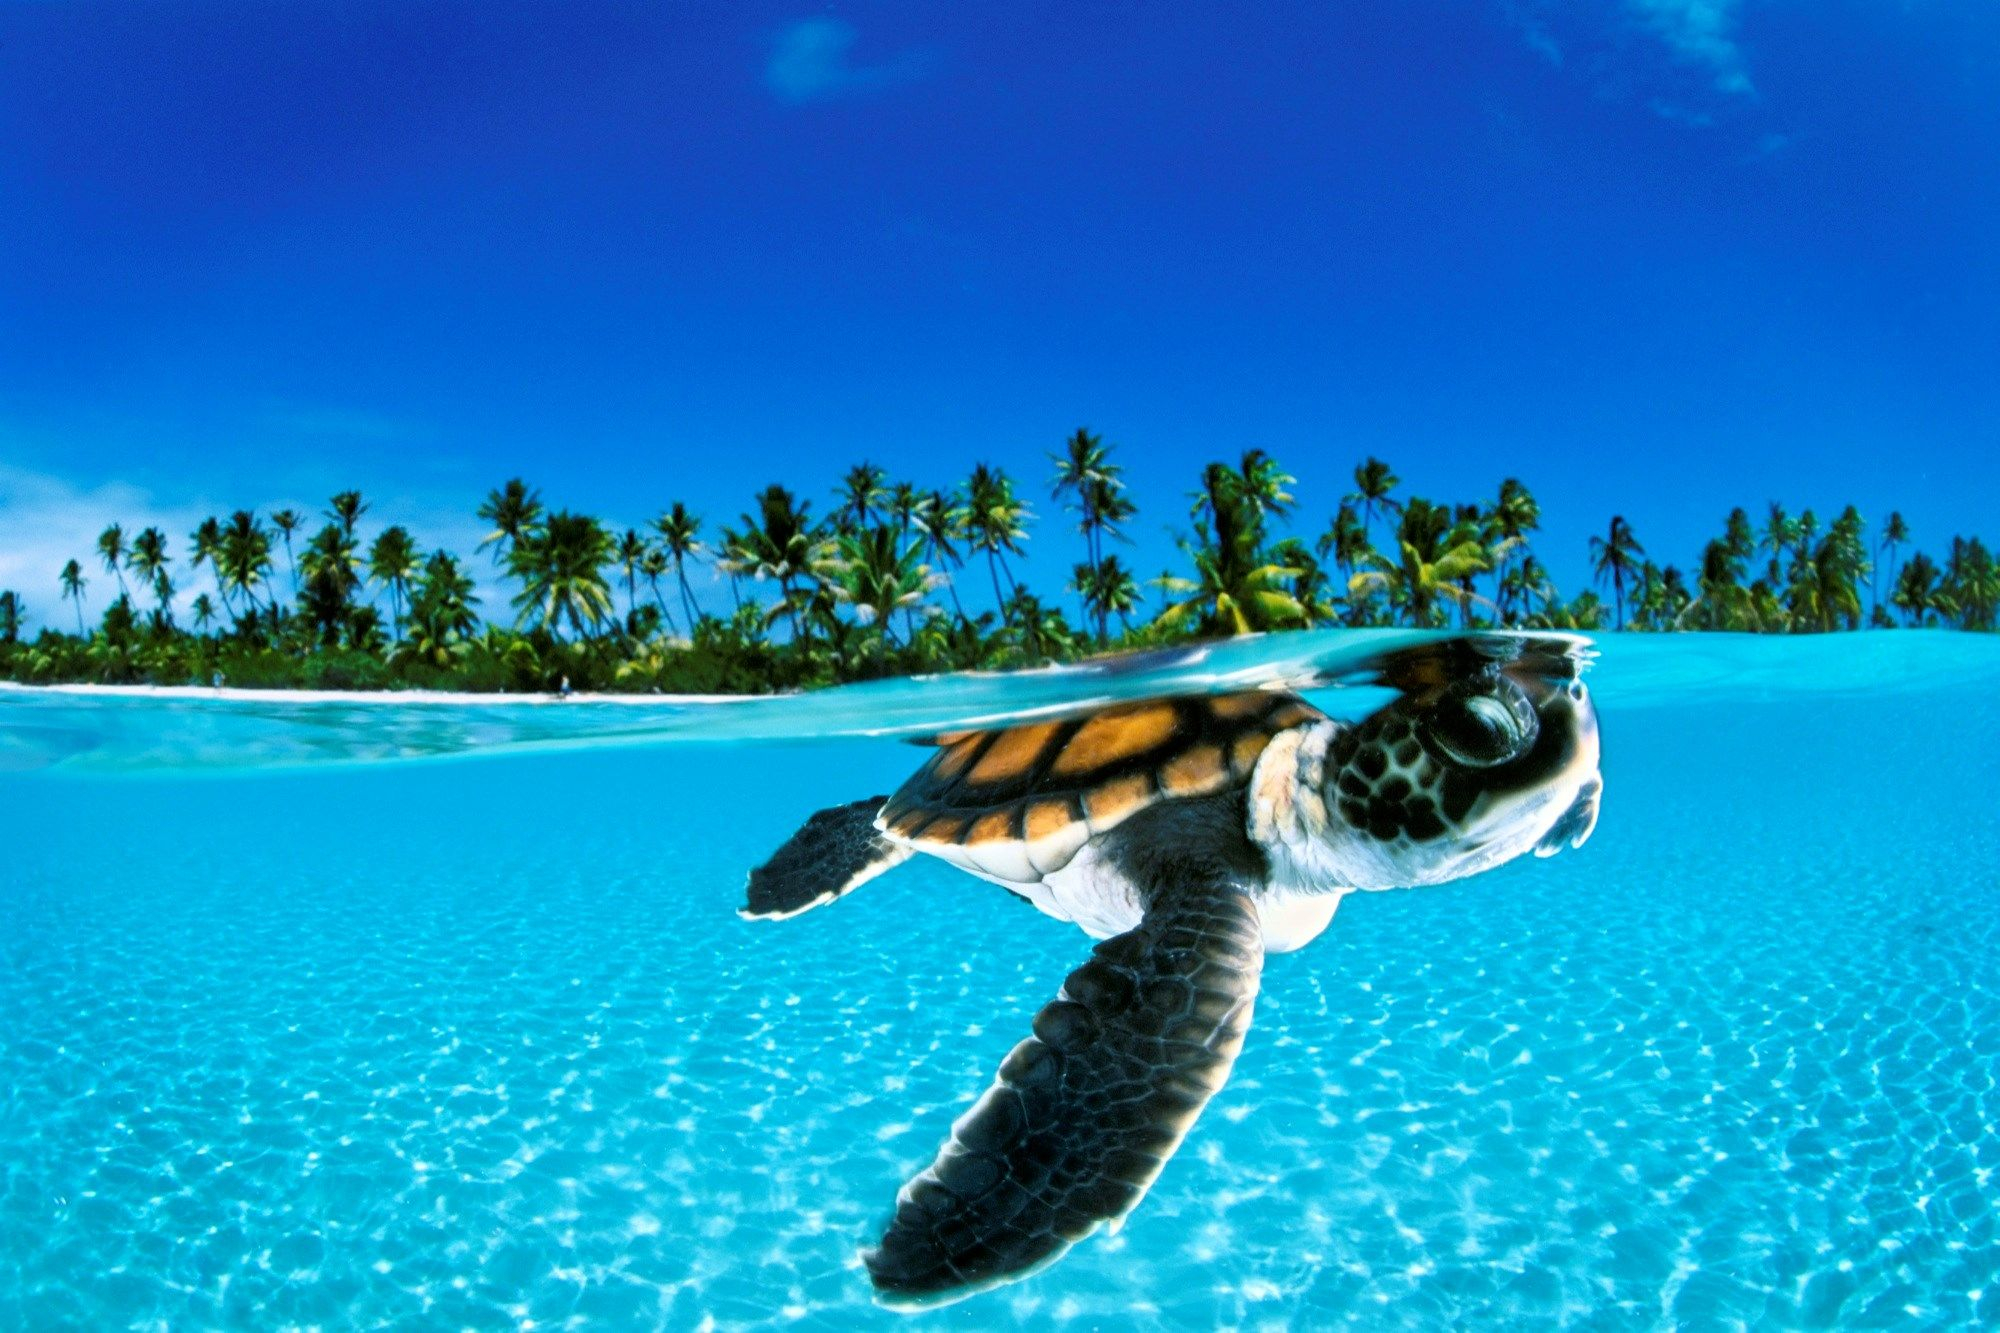 2000x1333 underwater high resolution desktop backgrounds | Baby sea turtles, Life under the sea, Baby turtles